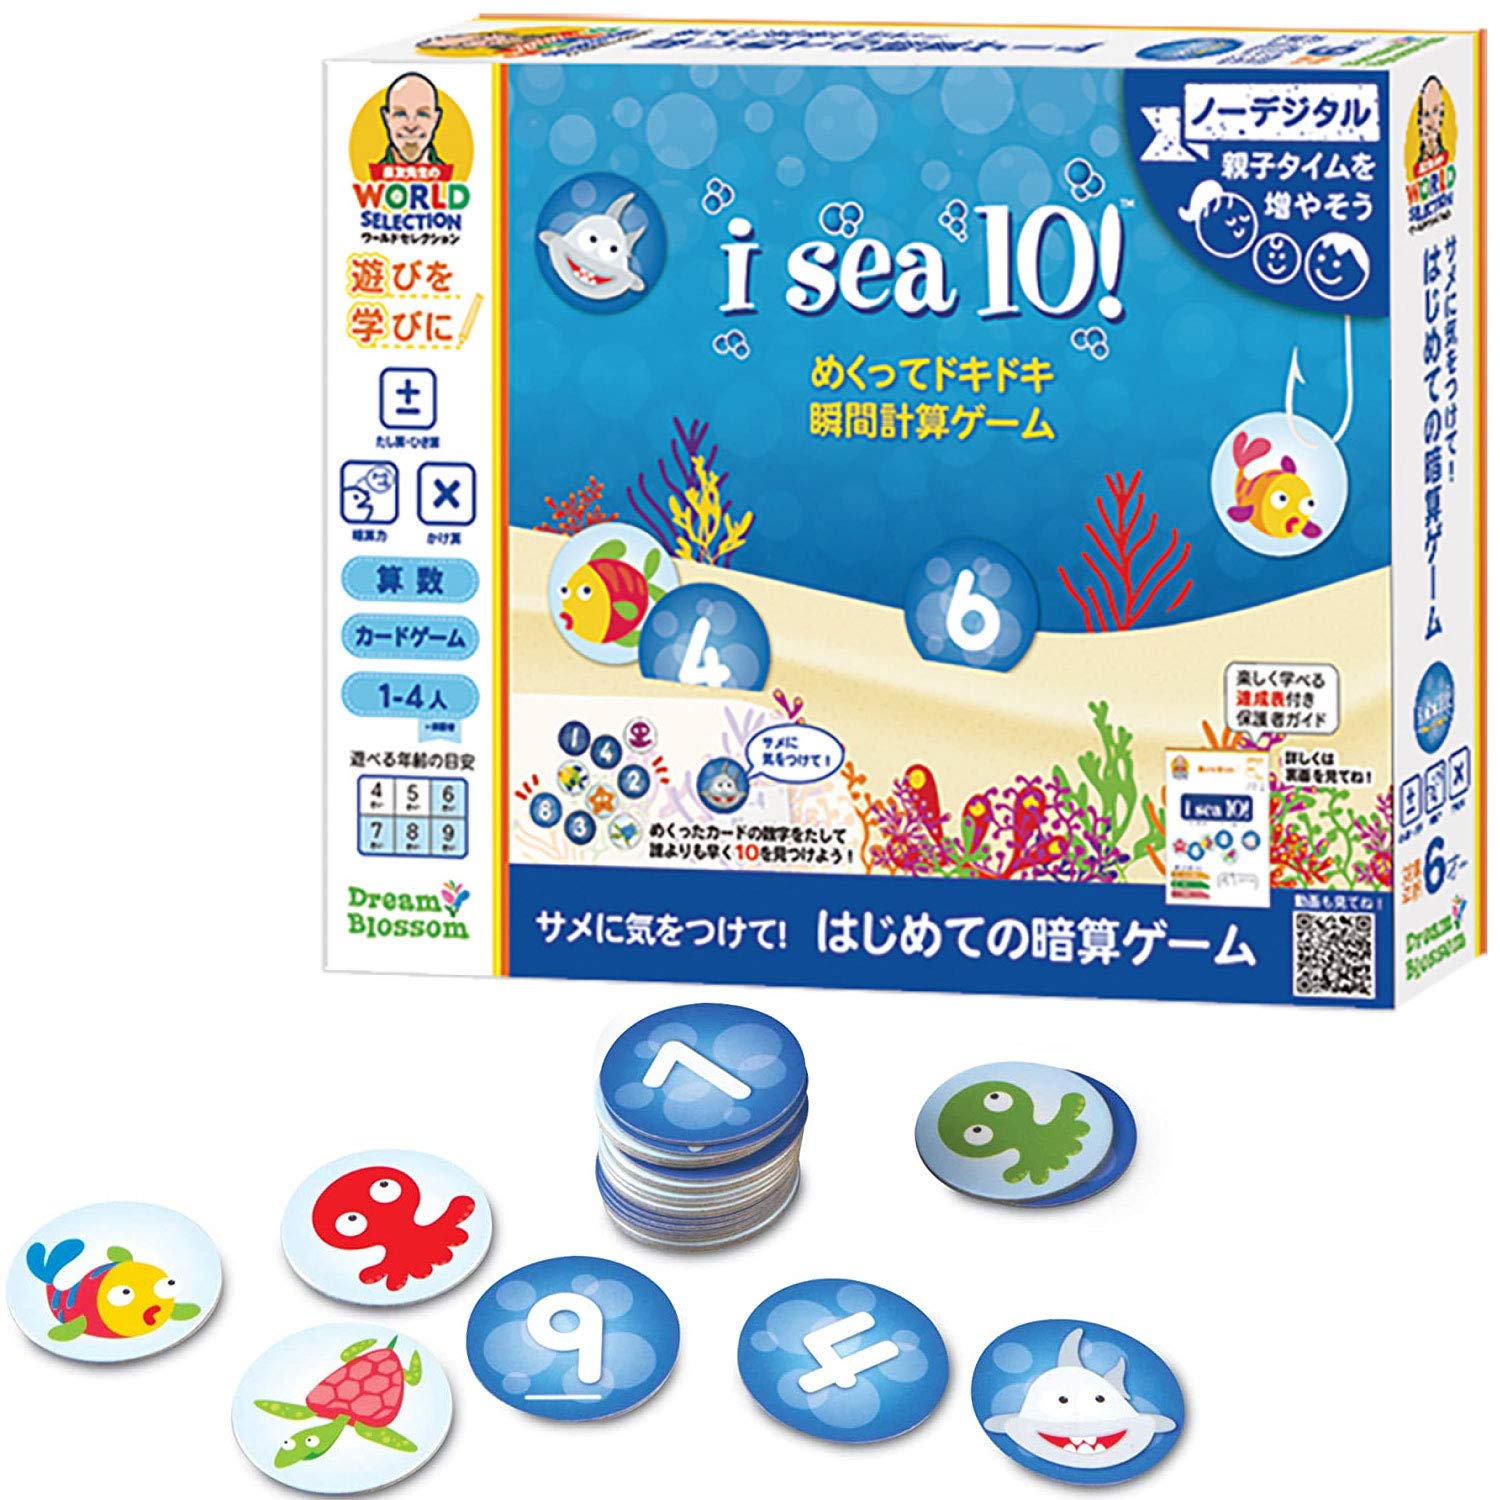 Nagatomo Sensei's World Selection Math Game, Beware of Sharks! First Mind Math Game, Authentic LSP1771-JNS